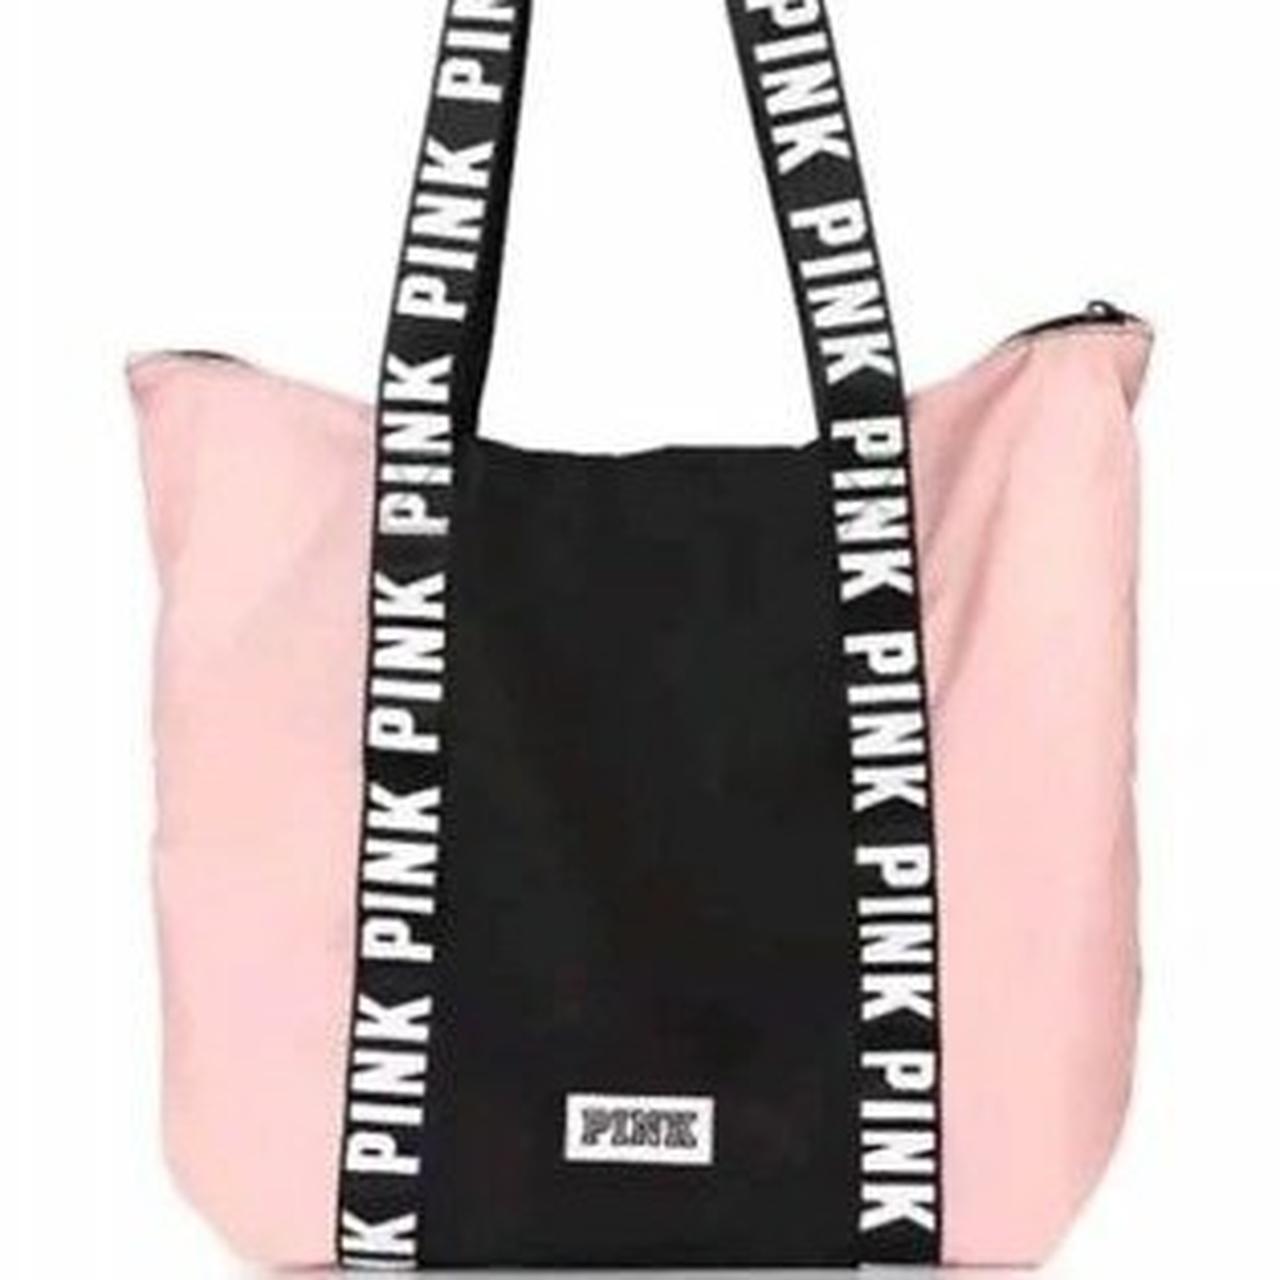 Brand new Victoria's secret PINK tote bag. It's a